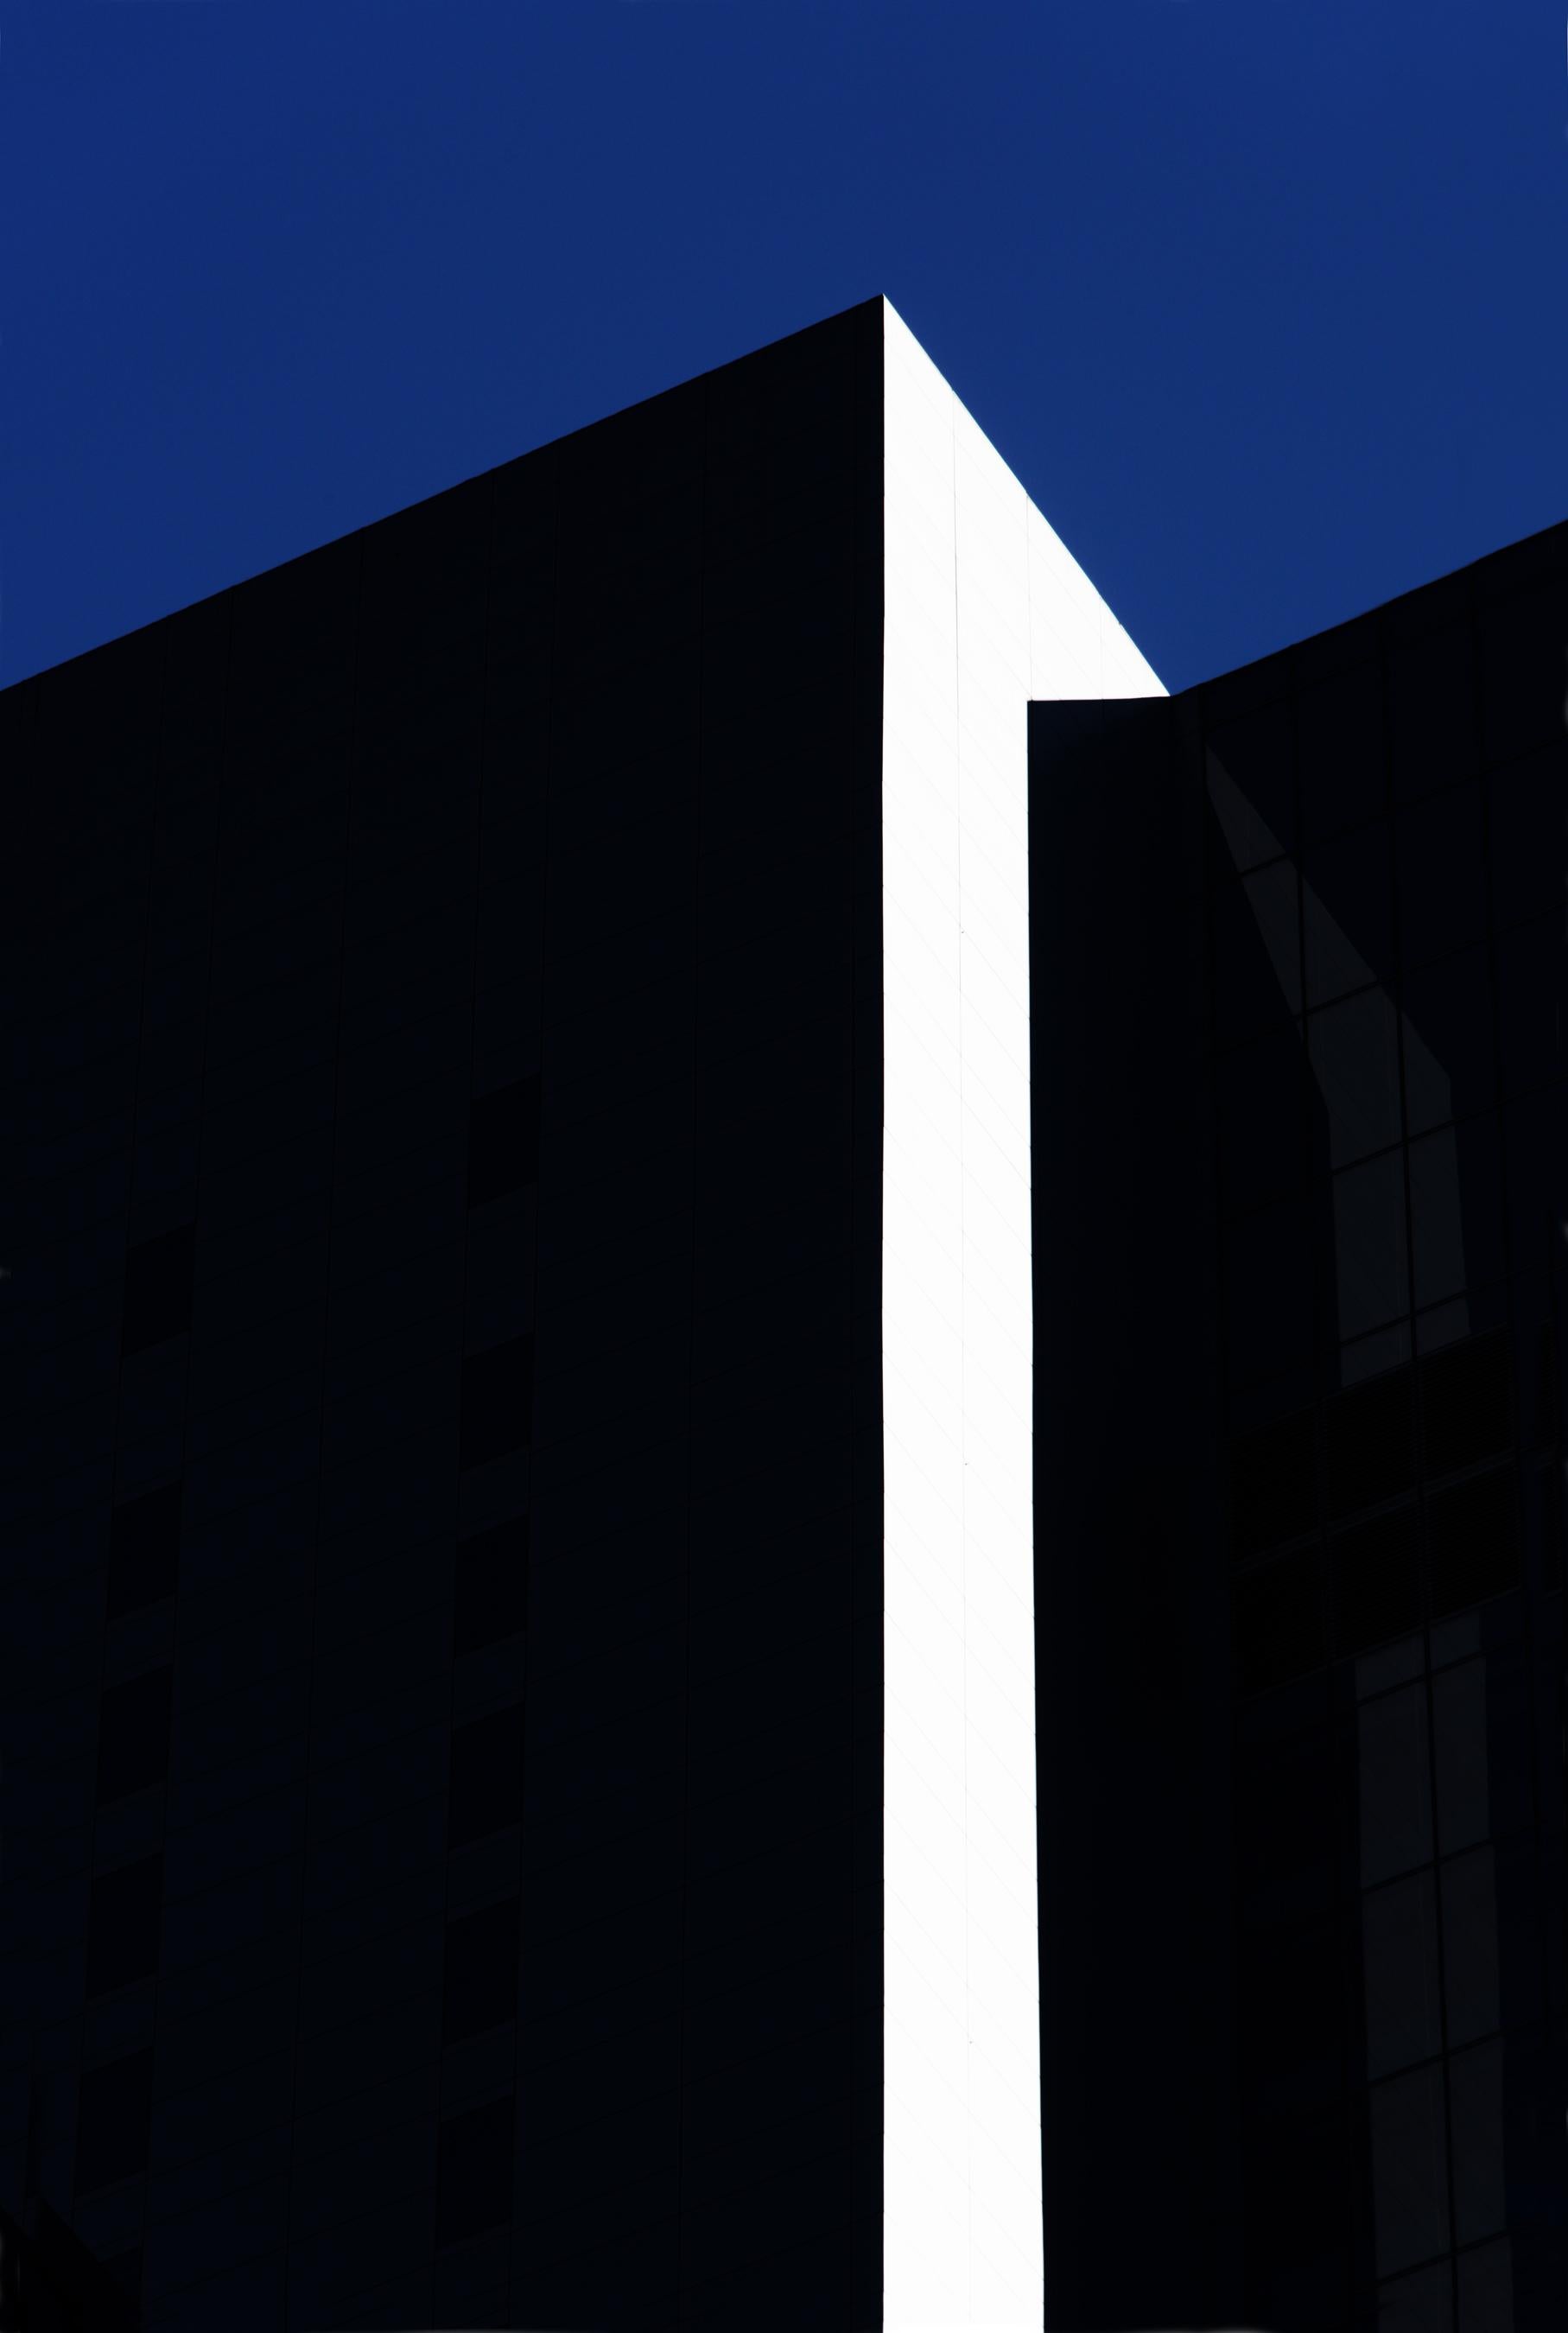 Bob Krasner Color Photograph - "Illumination", photography, city, architecture, building, geometry, spike, blue